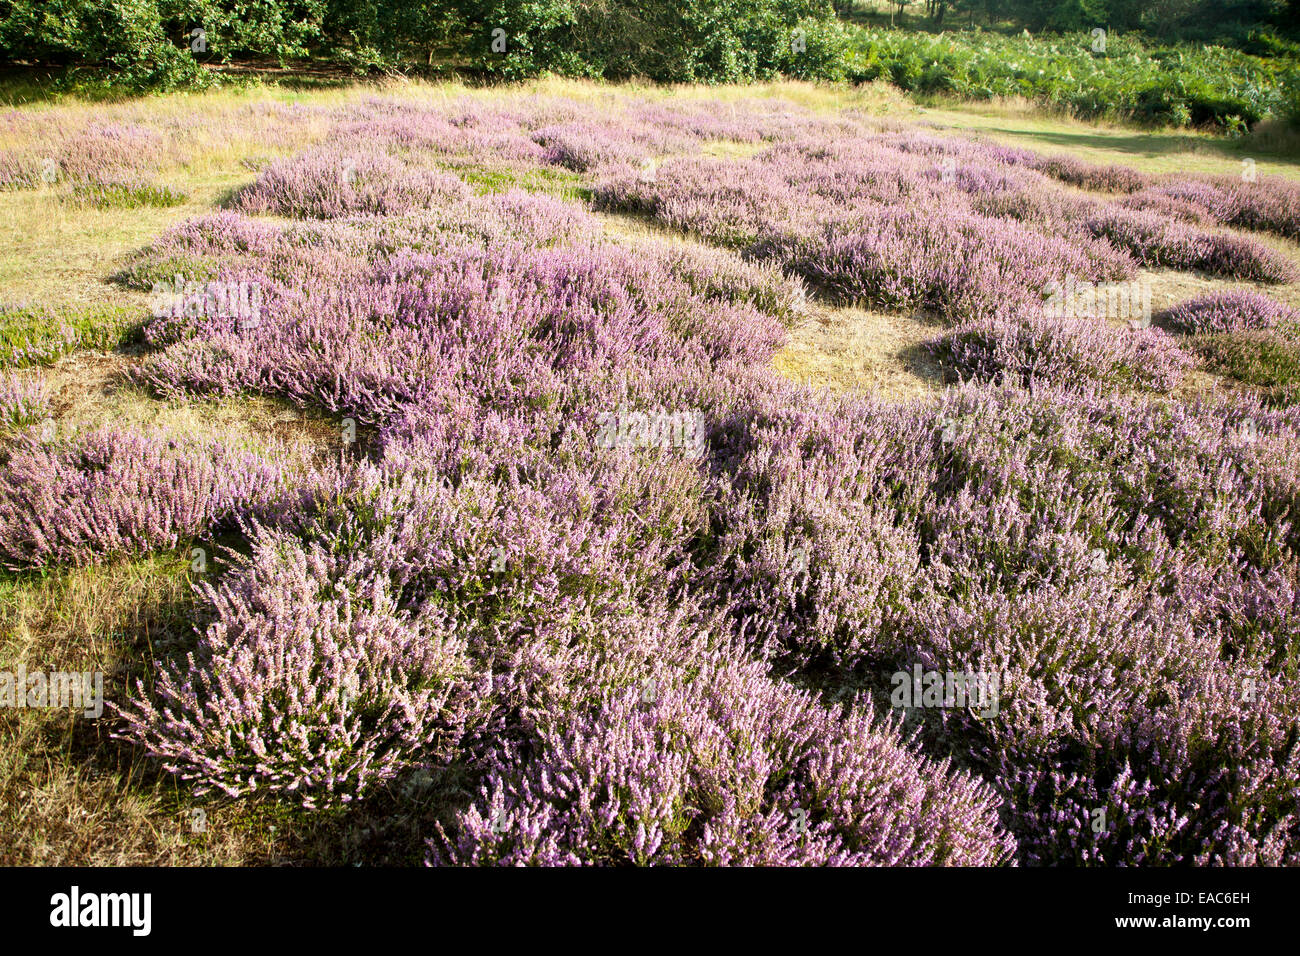 Purple flowering heather plants growing on heathland in summer, Shottisham, Suffolk, England, UK Suffolk Coasts and Heath AONB Stock Photo